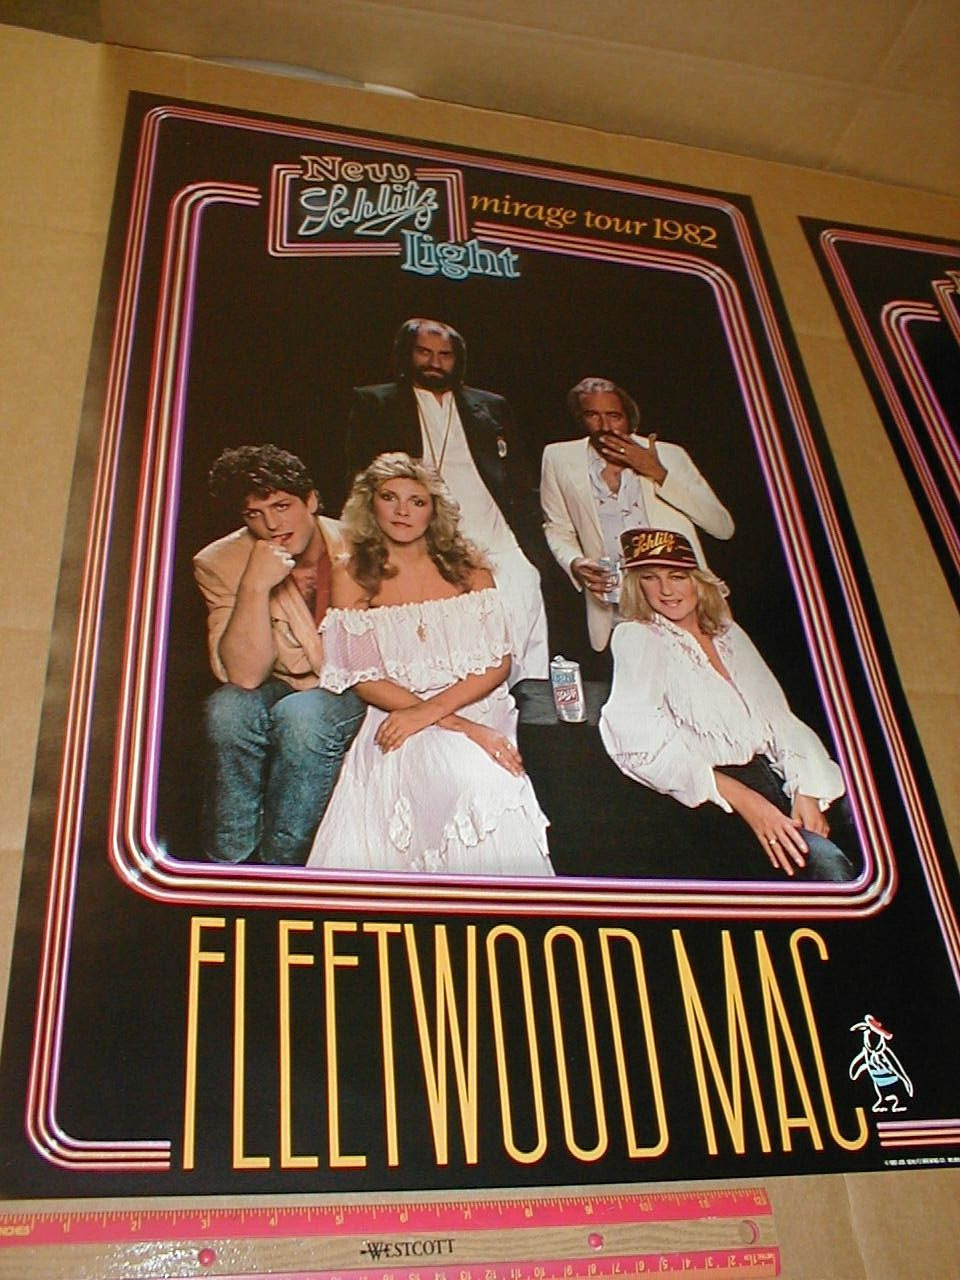 Fleetwood Mac Christine McVie vtg 1982 Mirage tour store display promo poster